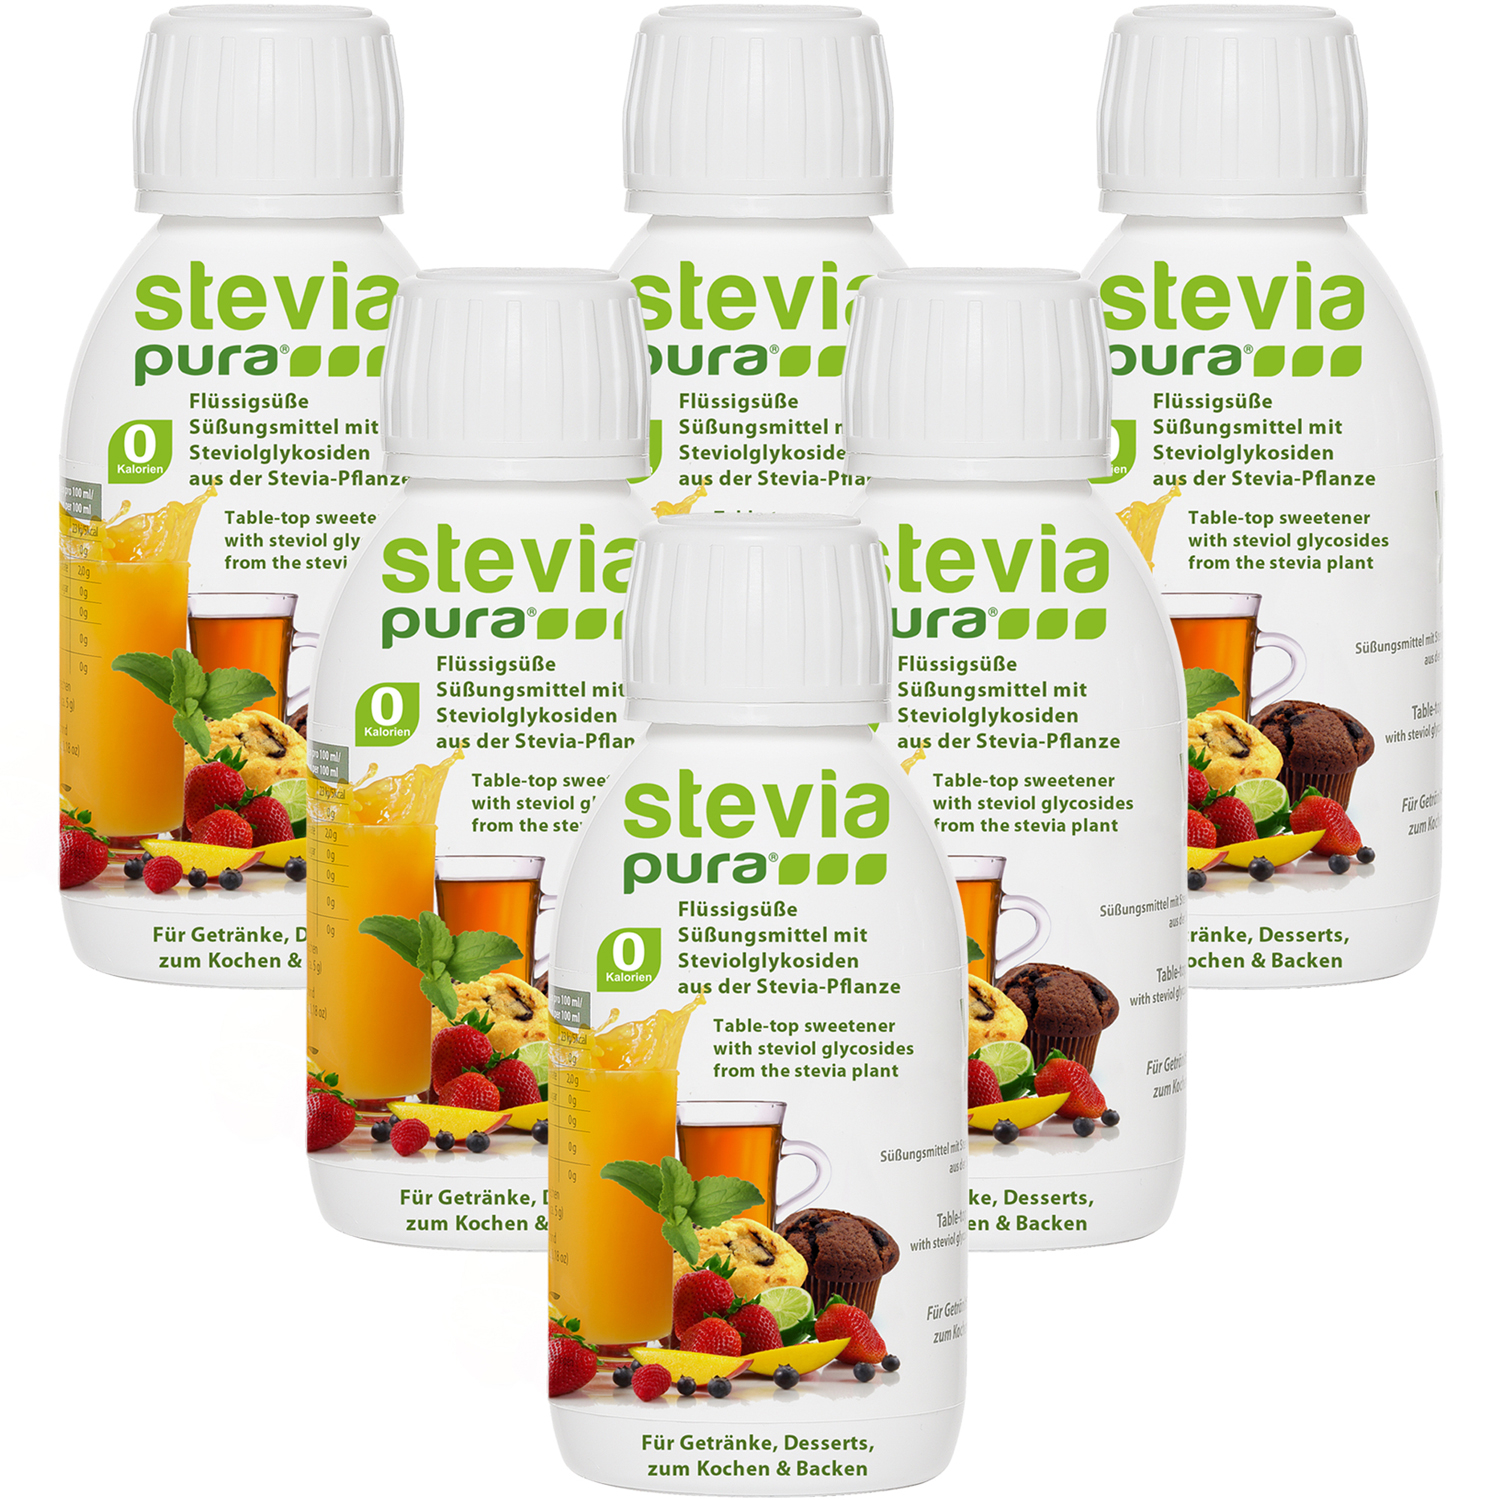 Stevia flüssig kaufen | Stevia Flüssigsüße kaufen | Stevia Drops 6x150ml